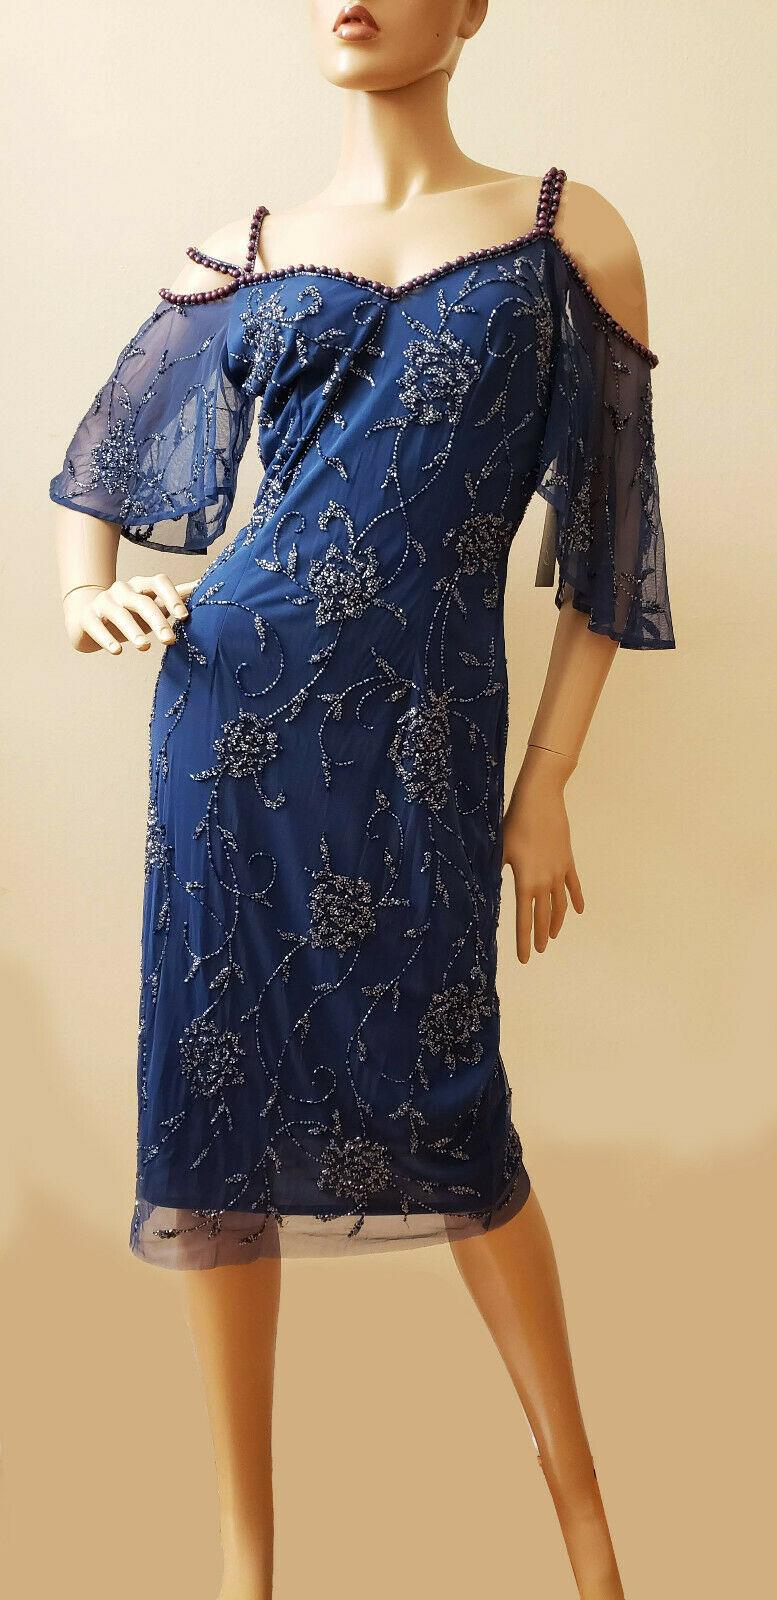 Pisarro Nights Blue Beaded Mesh Sheath Gown Evening Formal Dress  Size 2 - SVNYFancy